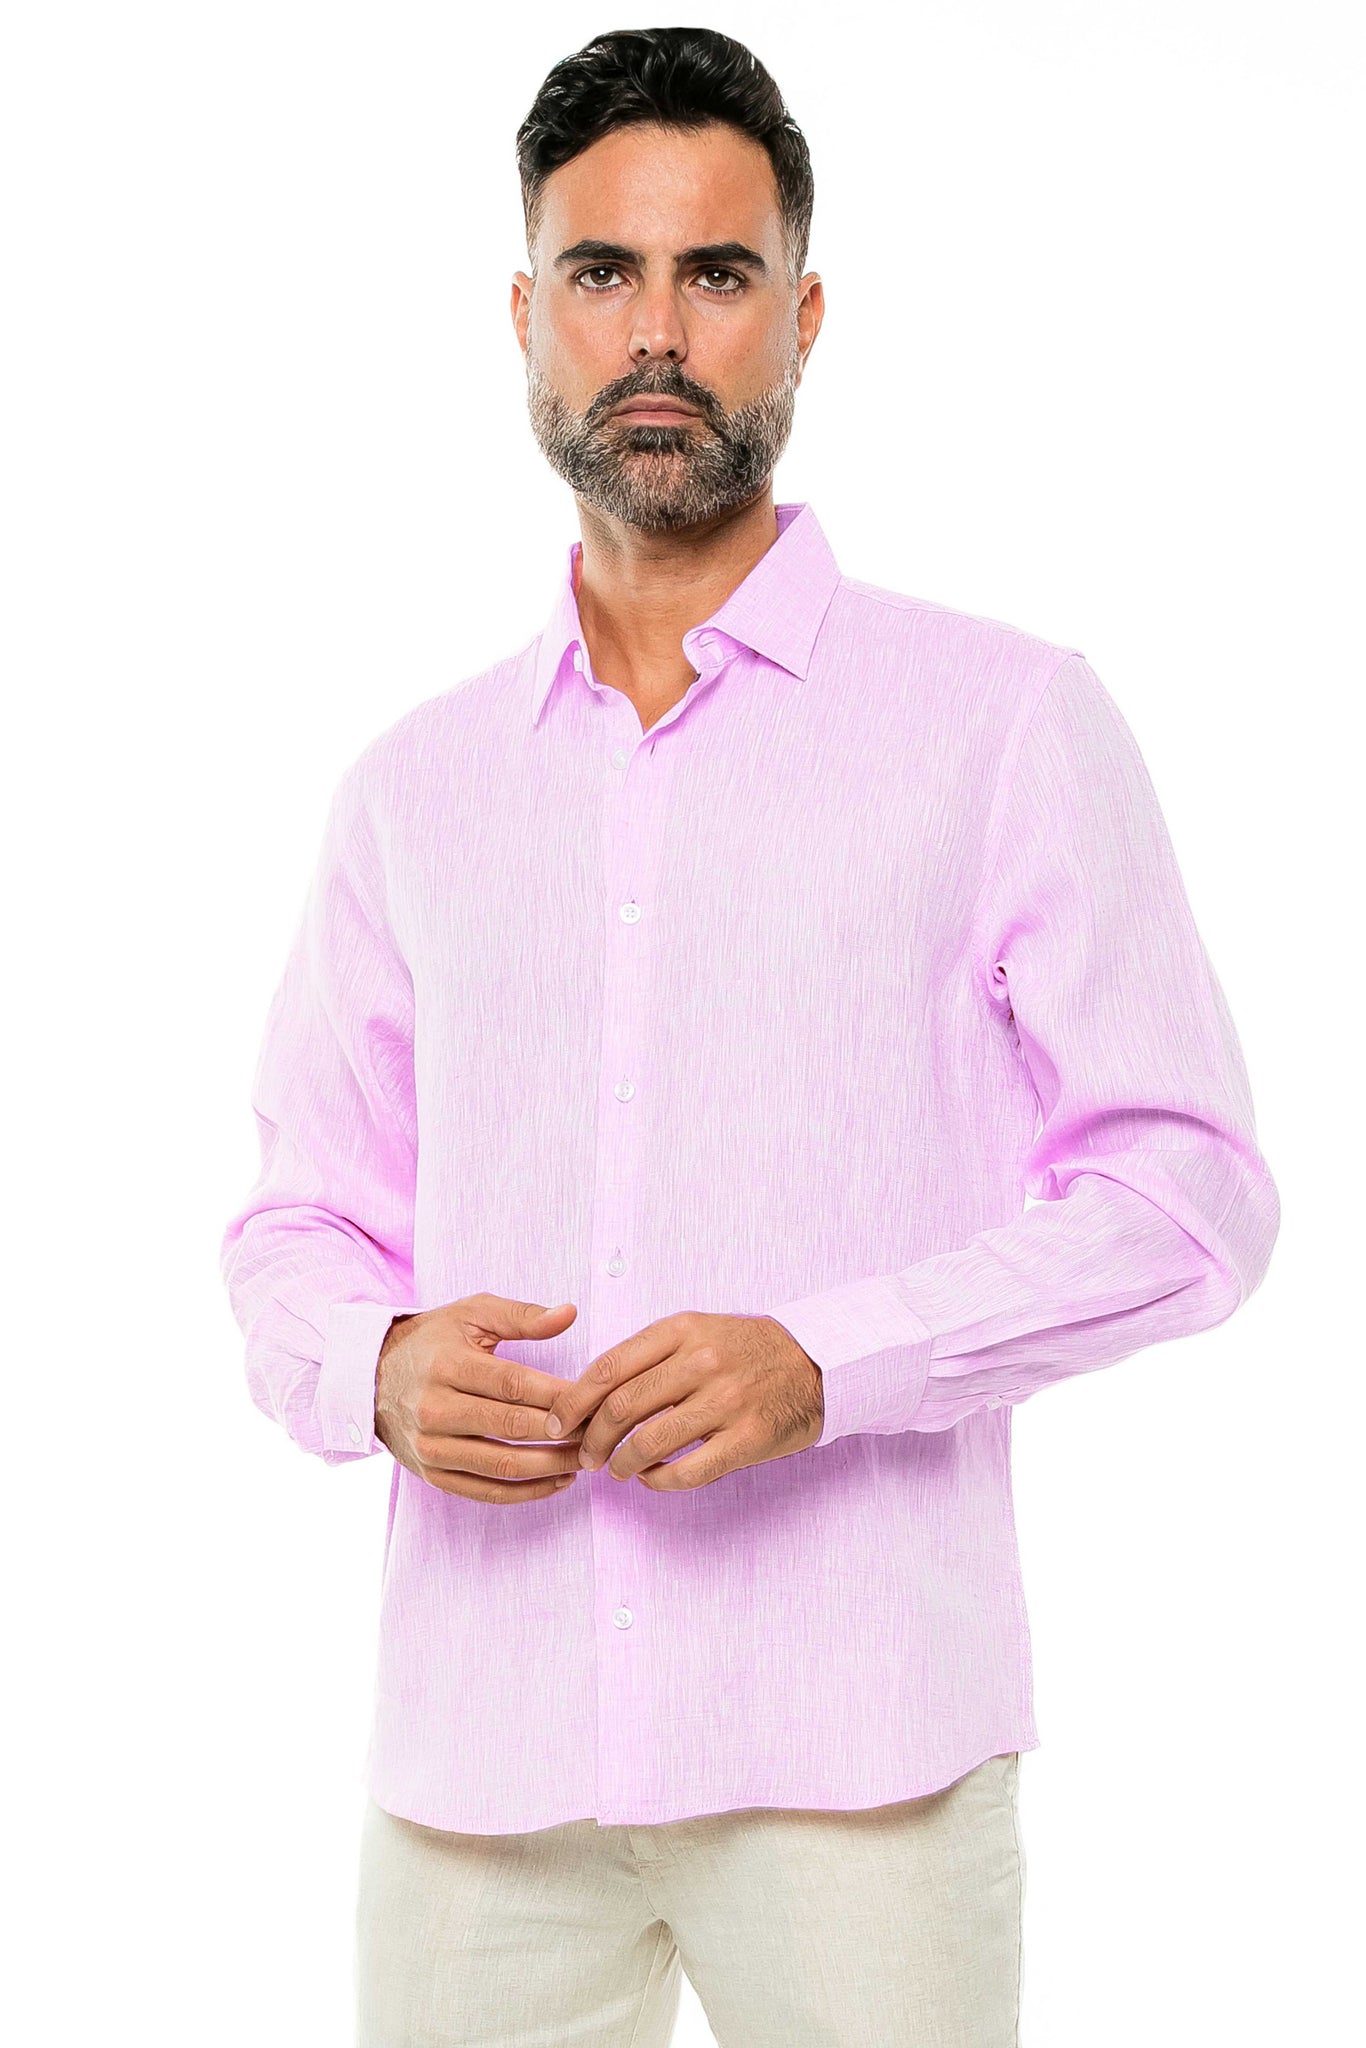 Casual Yarn Dyed Linen Shirt Long Sleeve Button Down